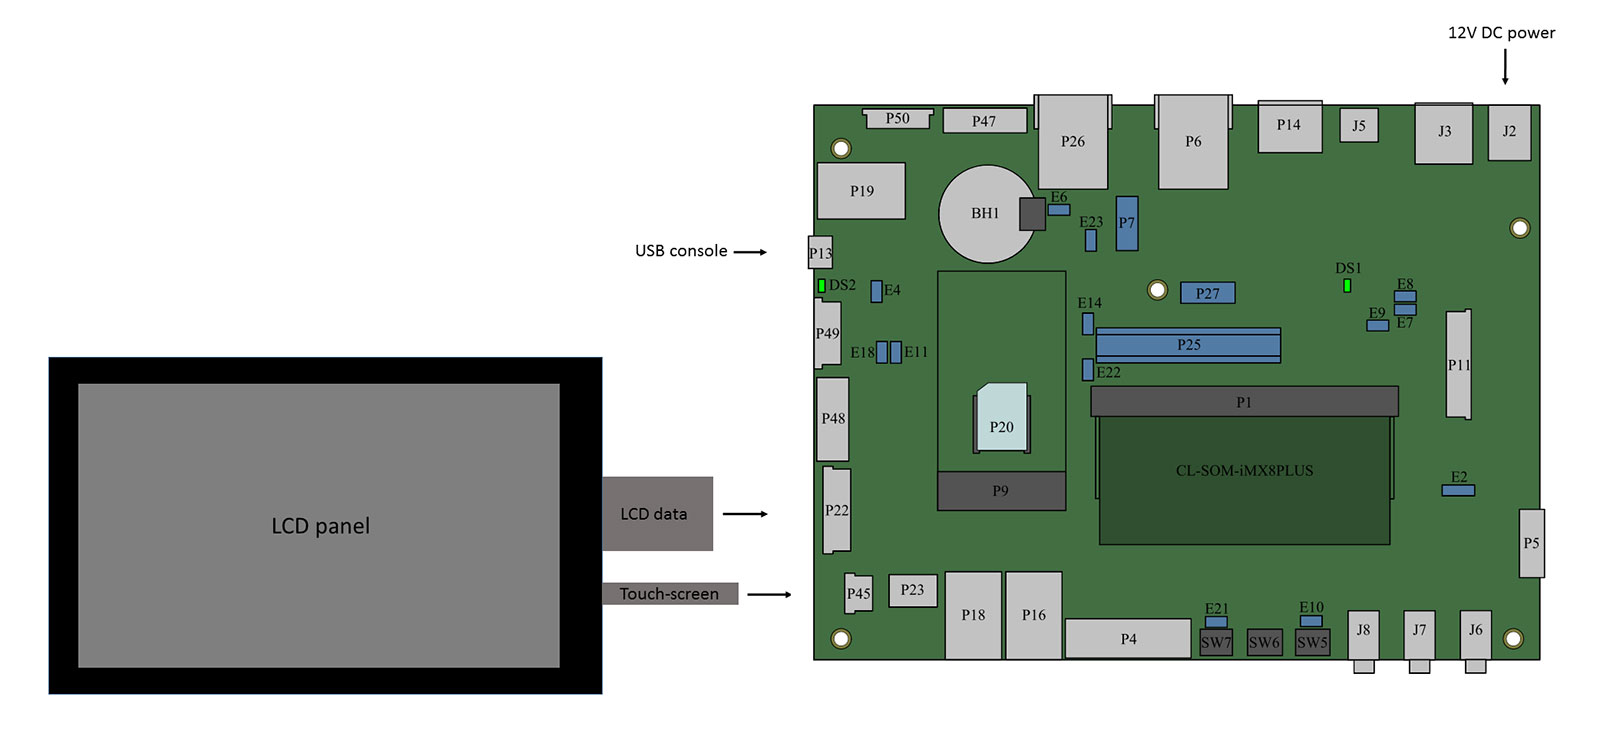 SOM-iMX8Plus-eval-kit-quick-setup.jpg